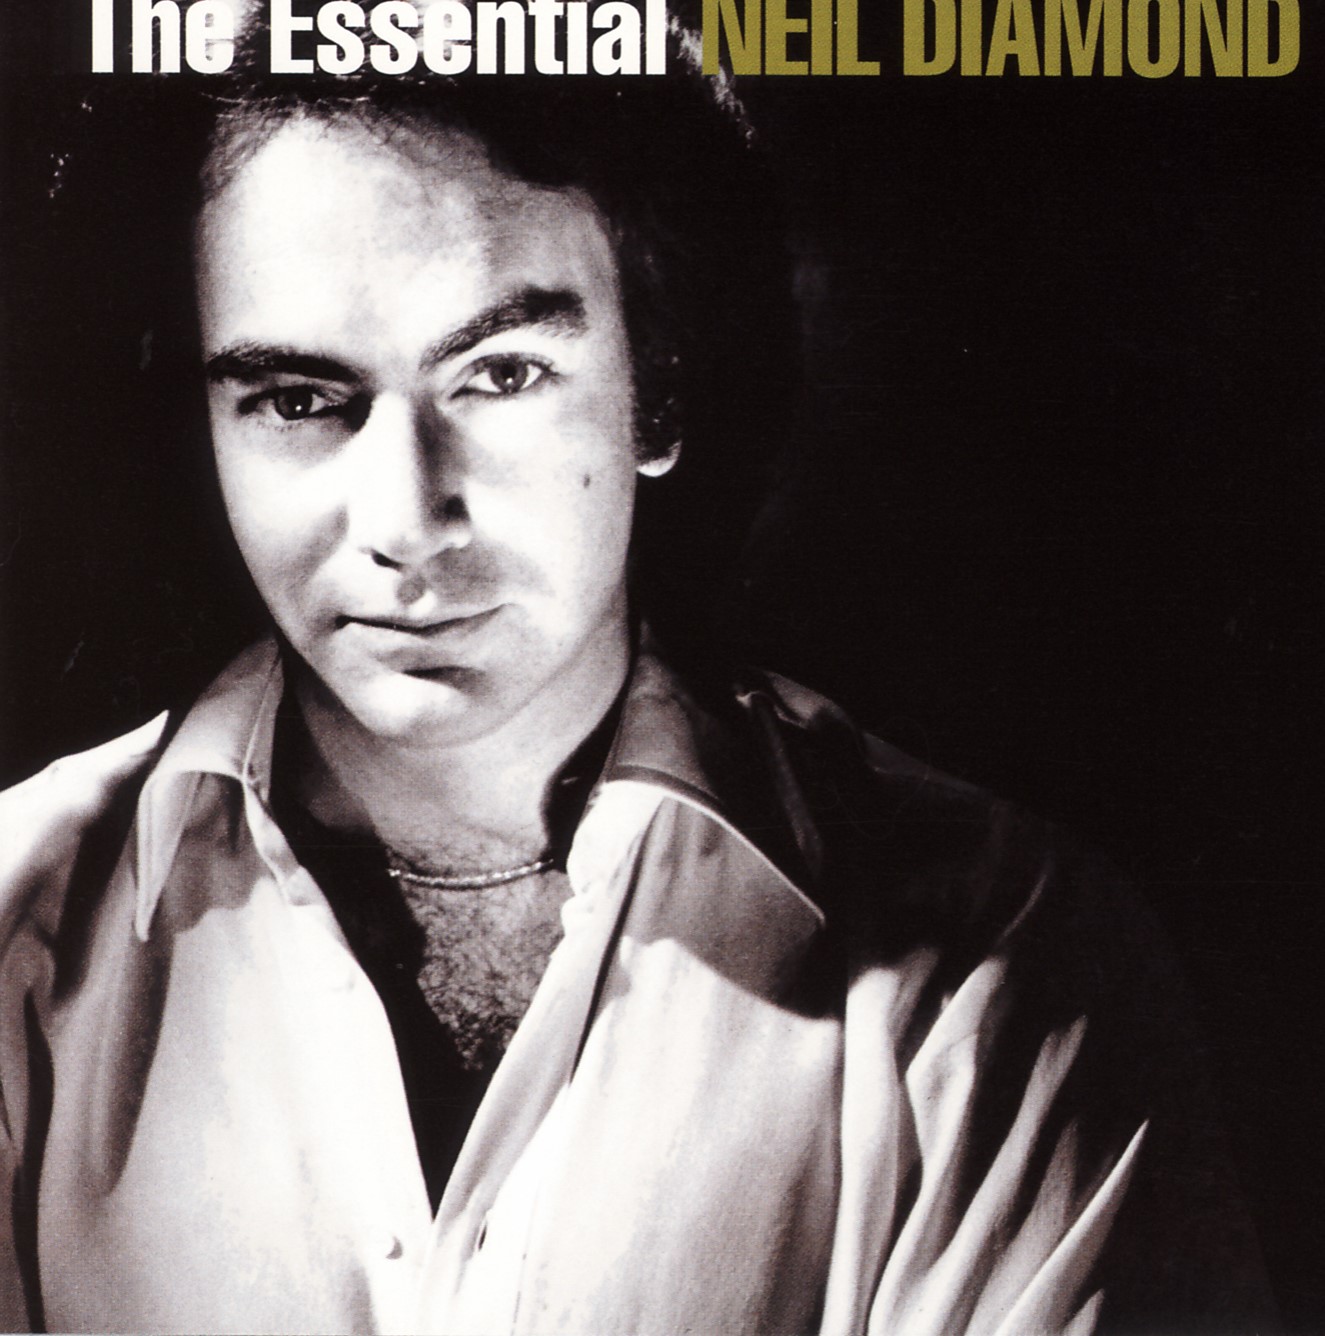 The Essential Neil Diamond 2002